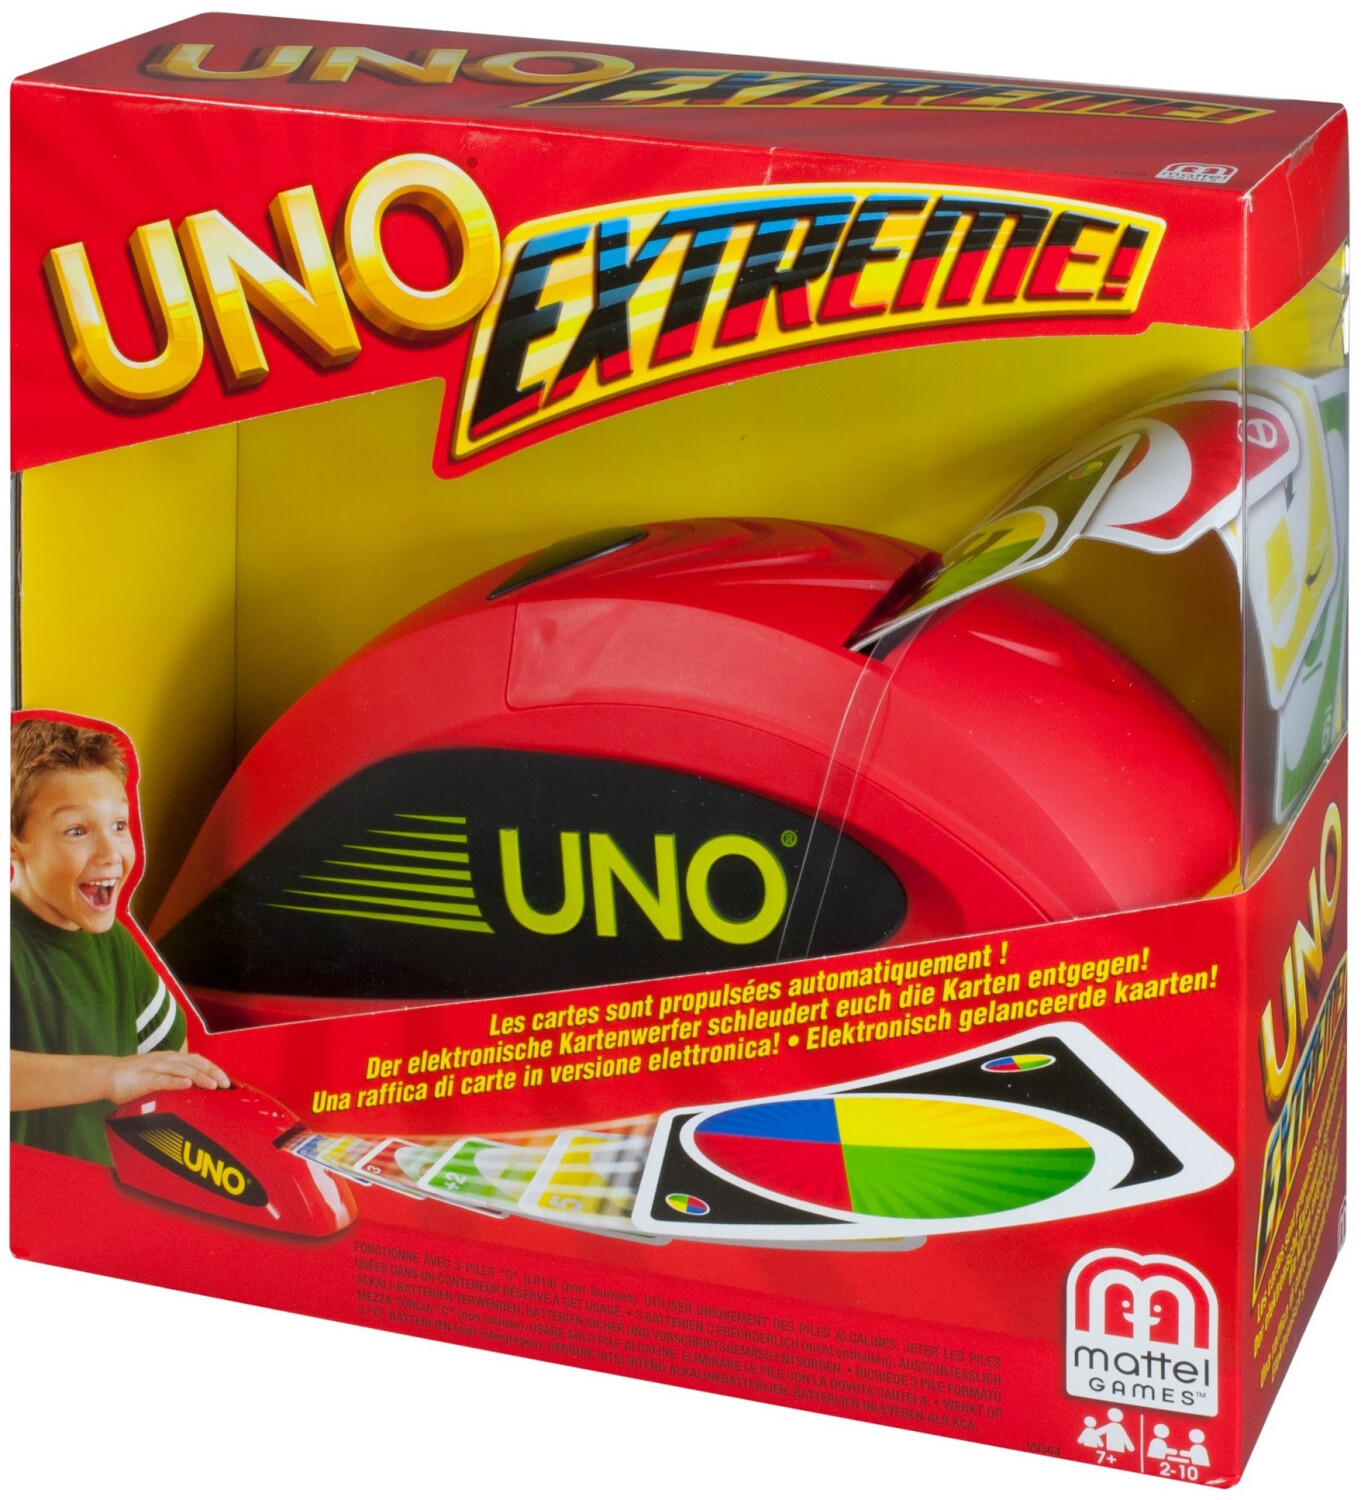 Uno Extreme (2011 Version)